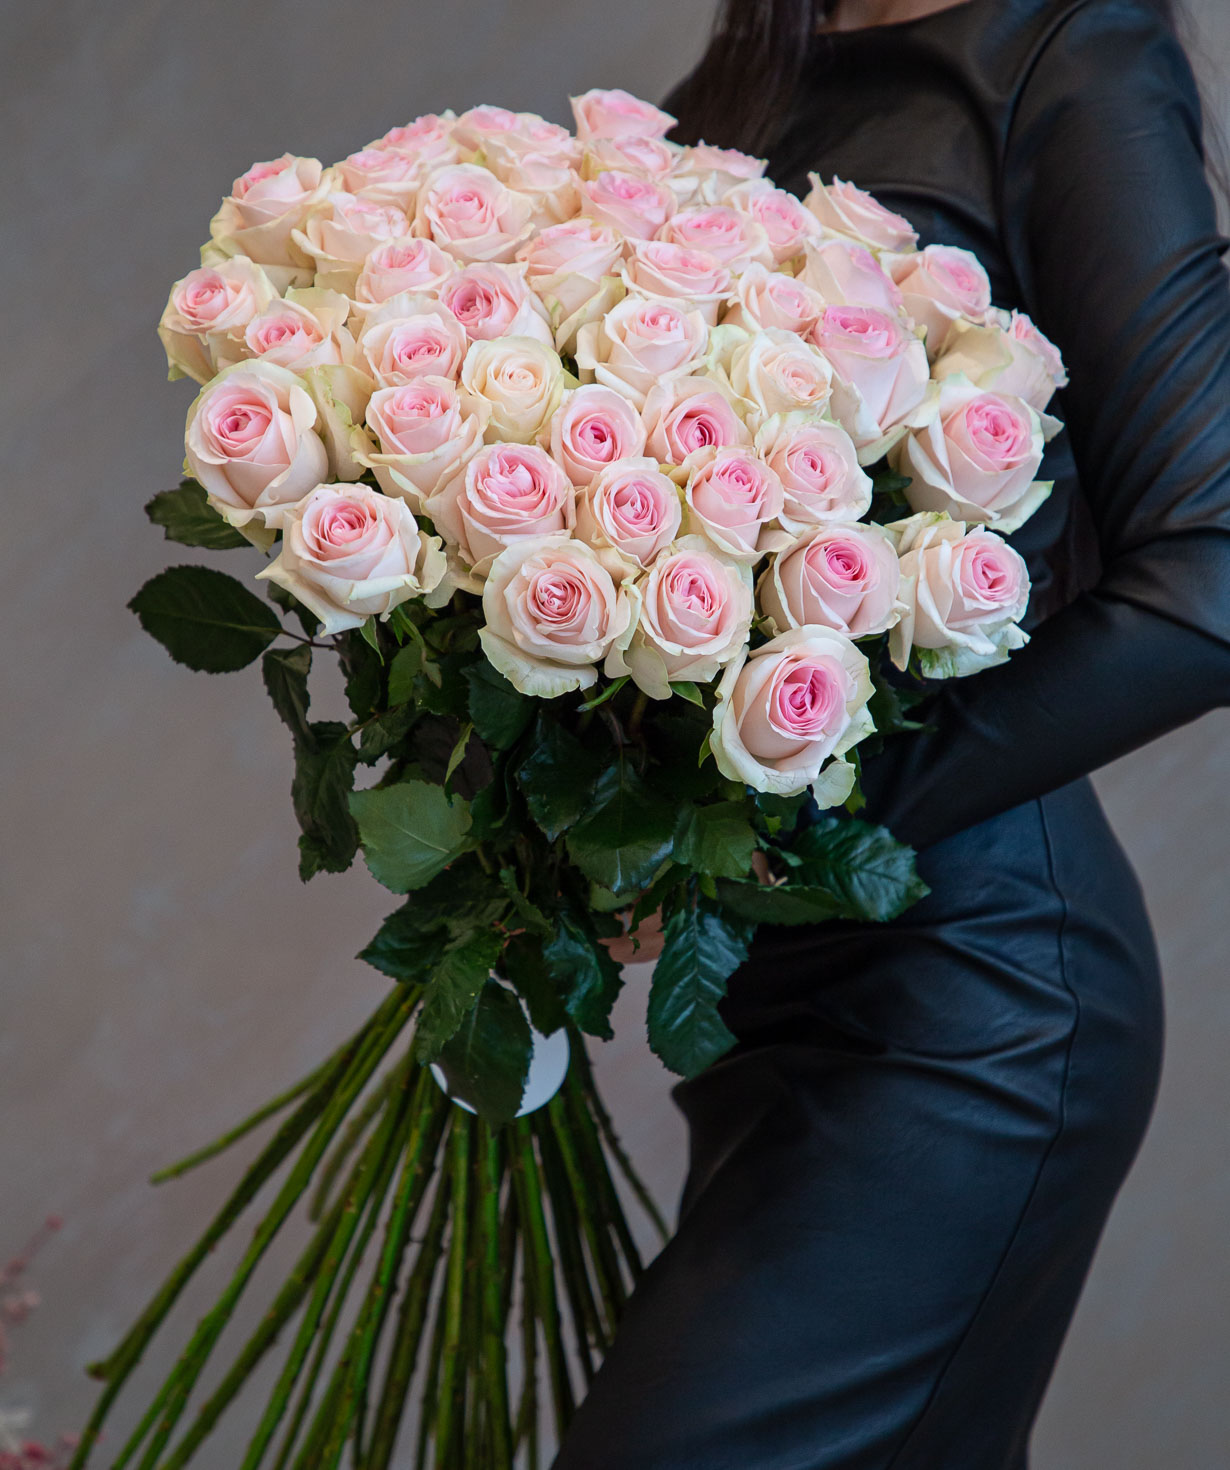 Roses «Revival sweet» light pink, 45 pcs, 80 cm